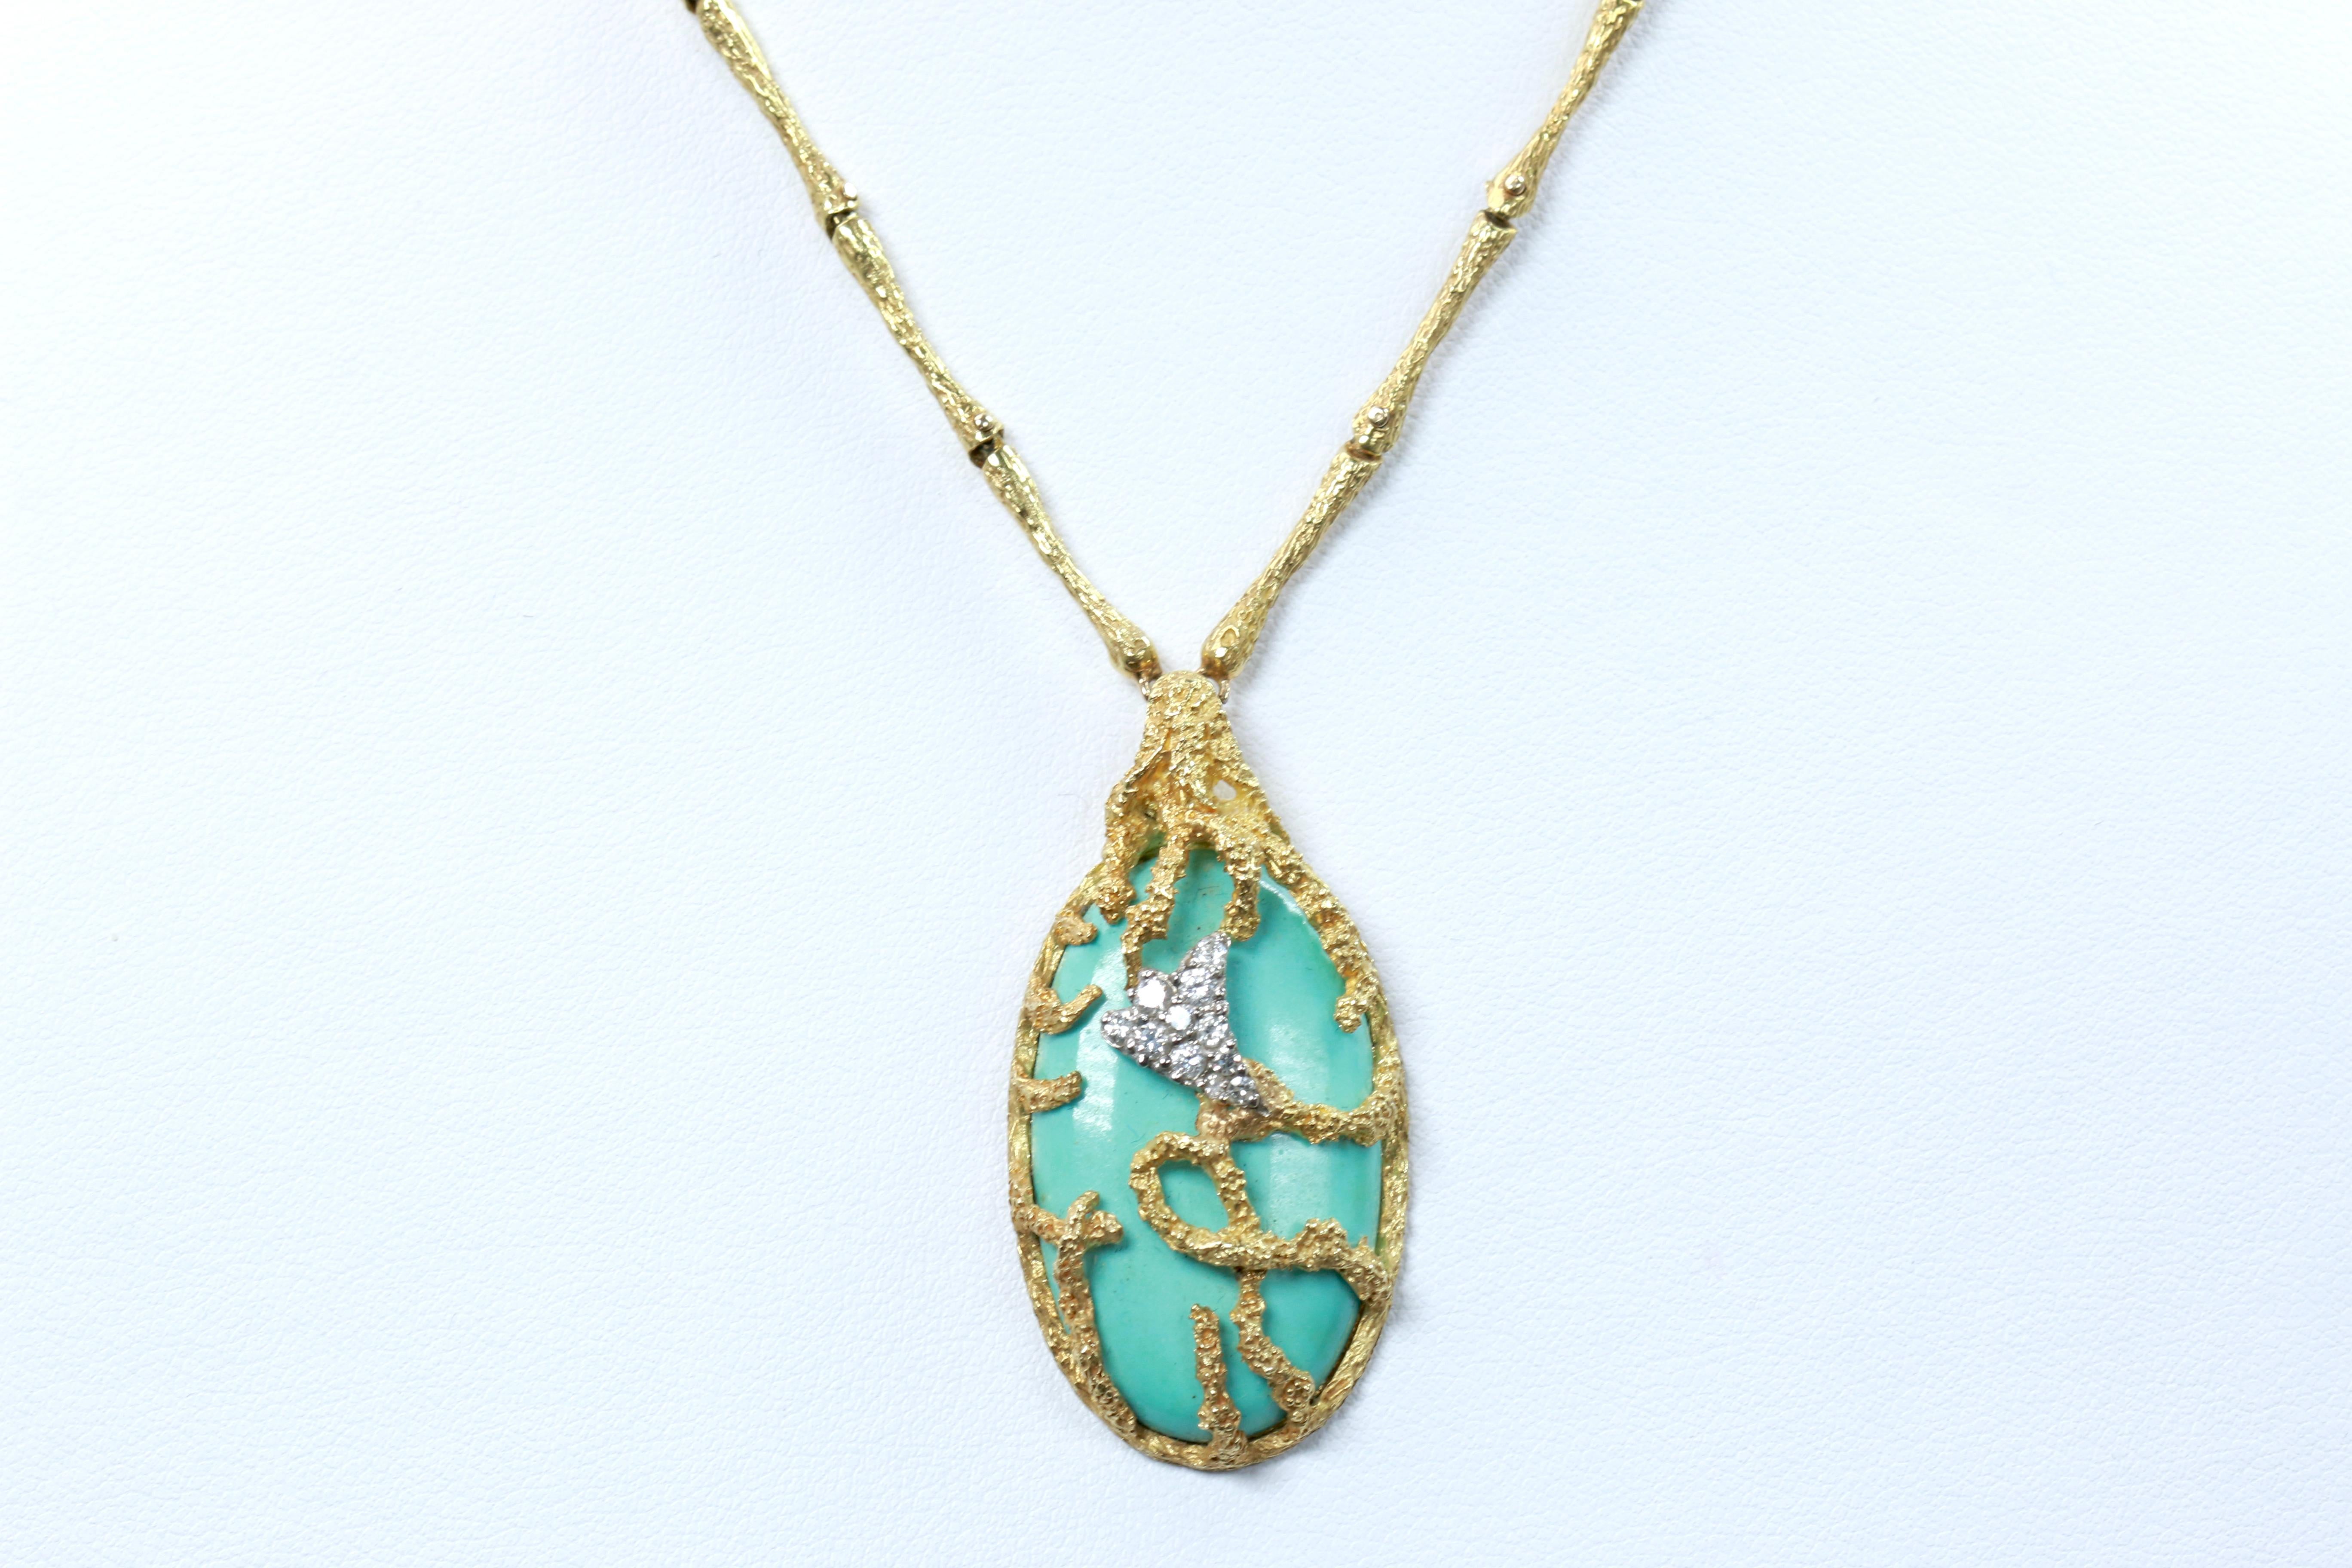 Women's or Men's Gold and Diamond La Triomphe Necklace with Turqoiuse Pendant